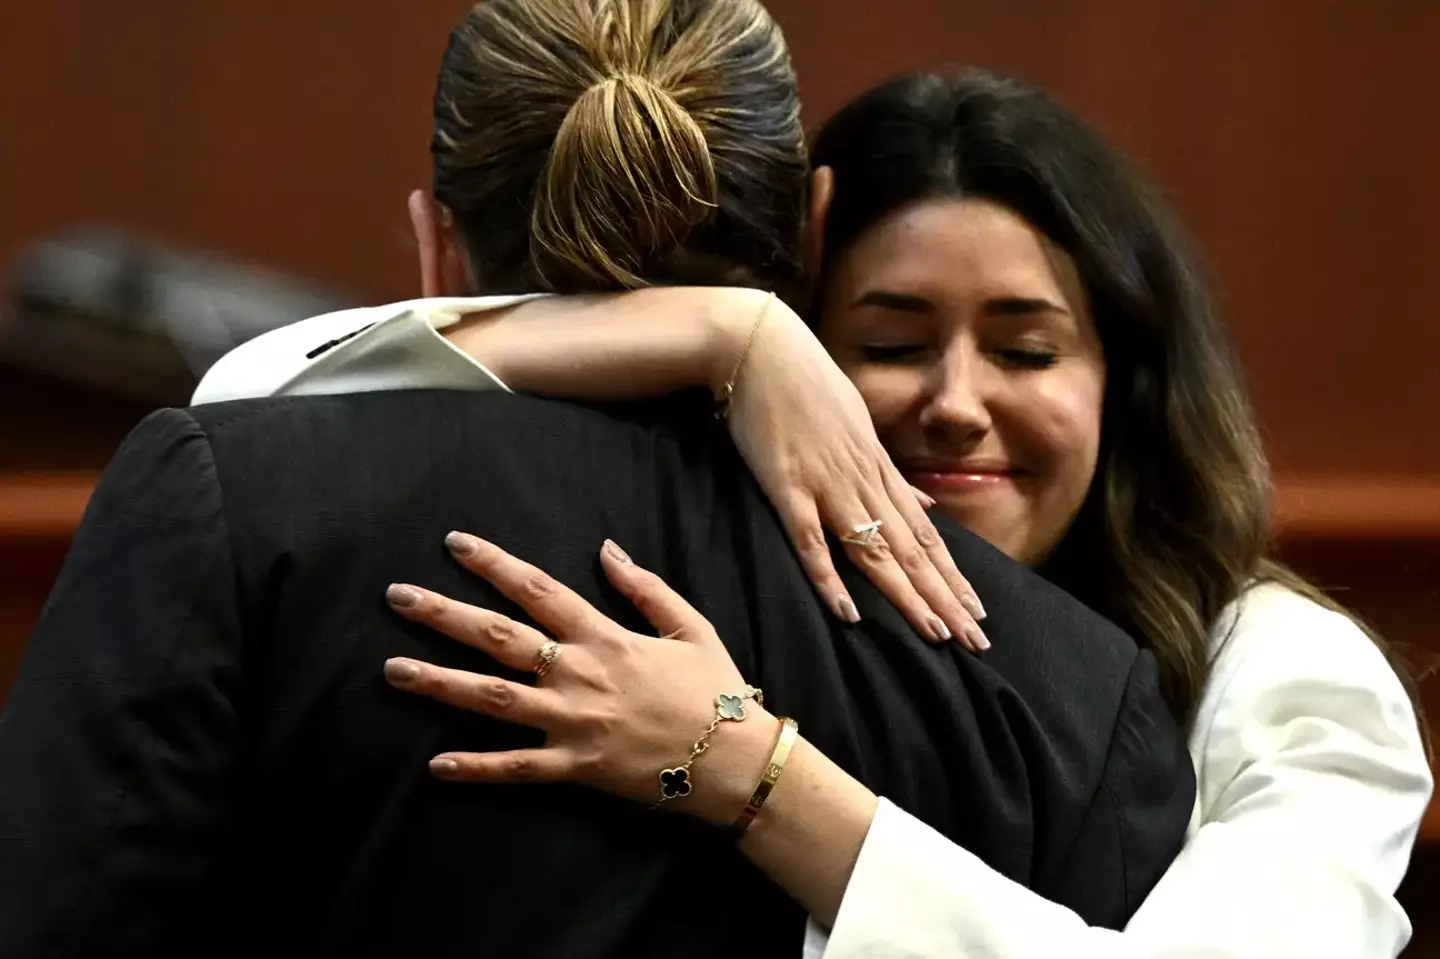 Vasquez hugging Depp in the courtroom.